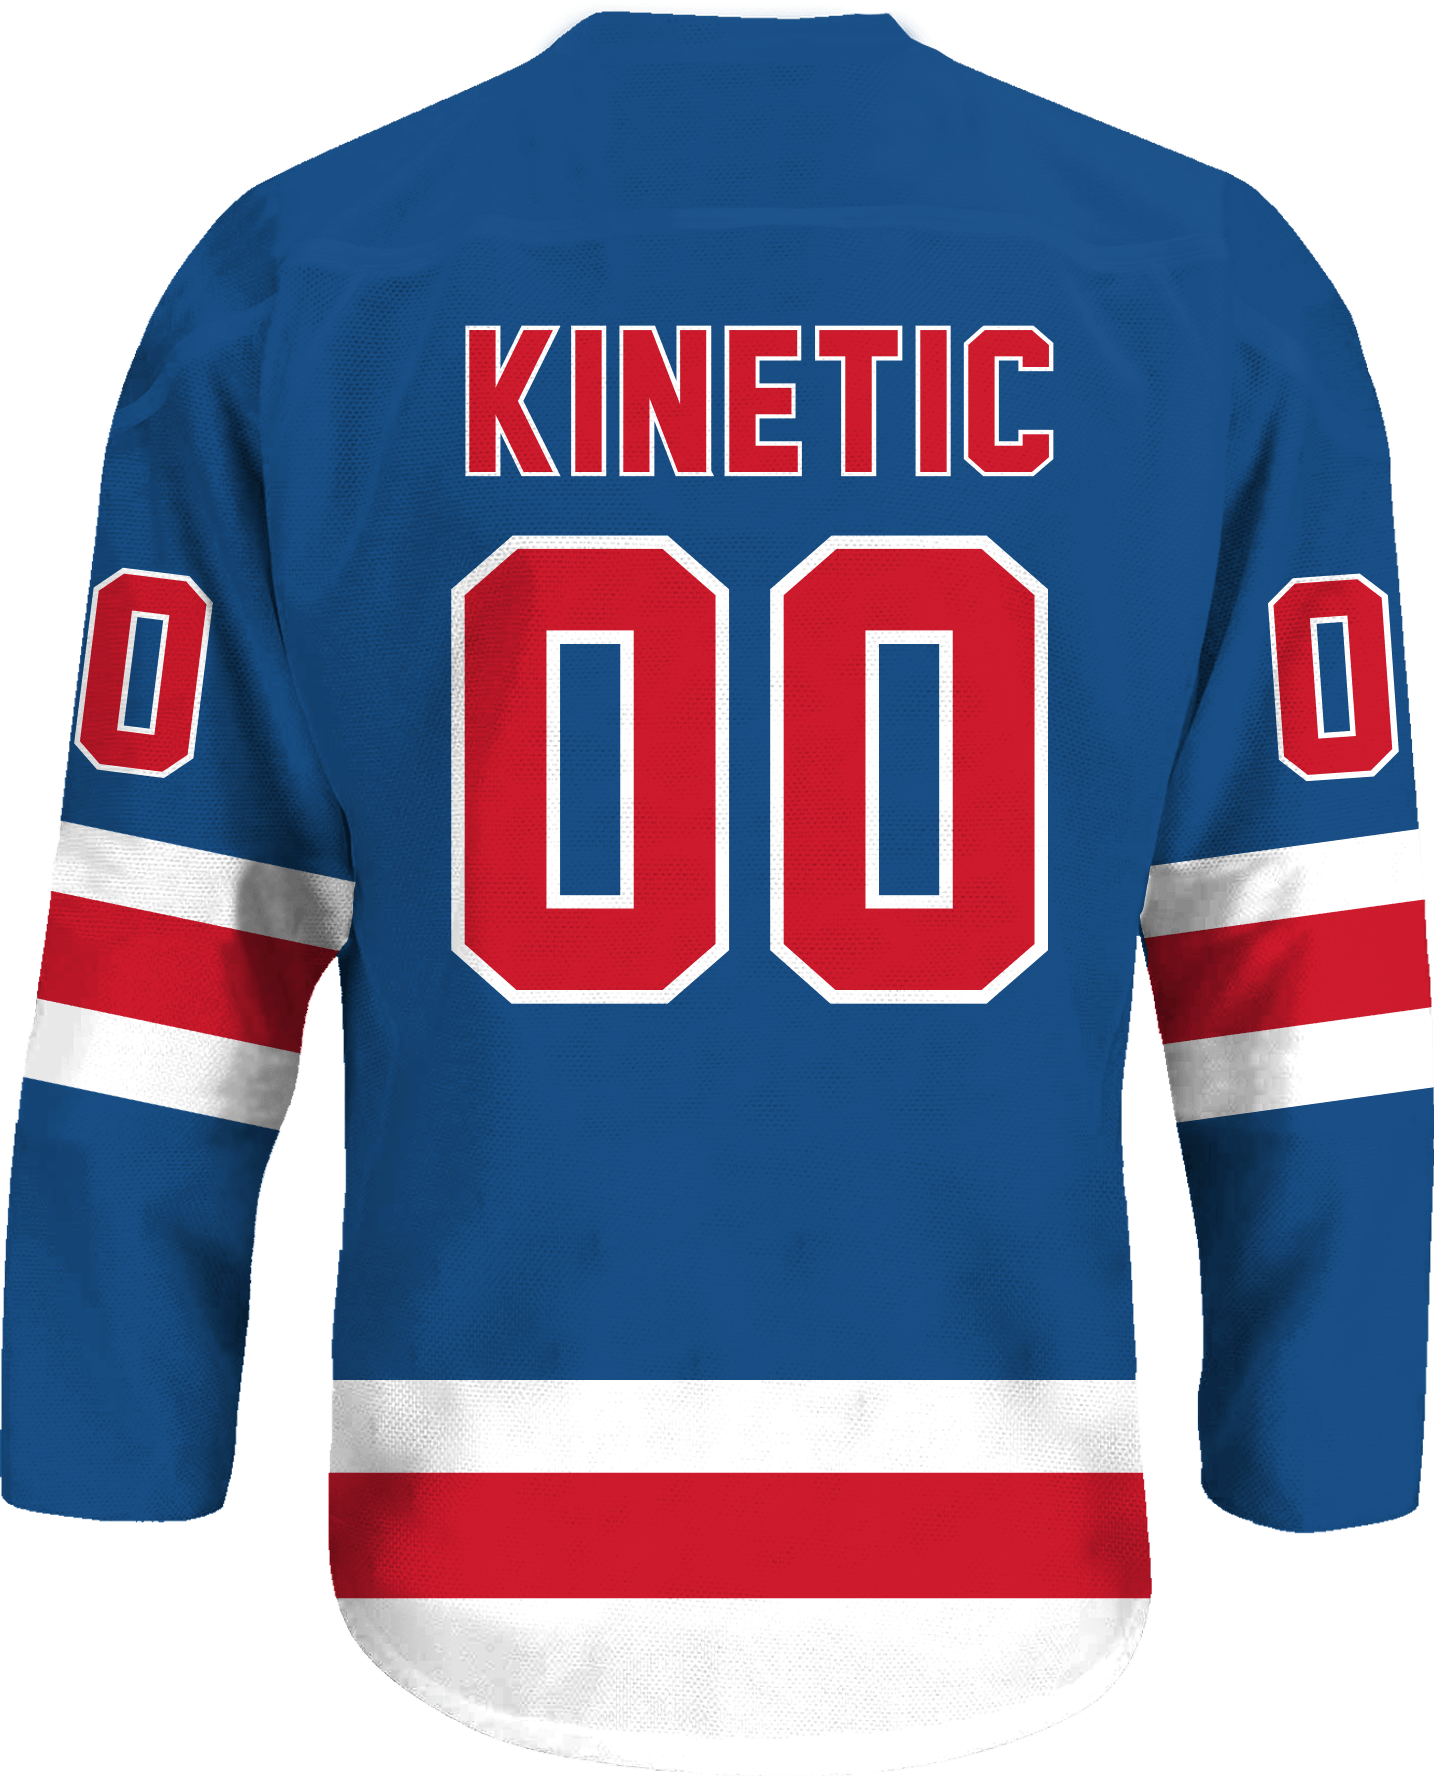 Kappa Sigma - Blue Legend Hockey Jersey Hockey Kinetic Society LLC 